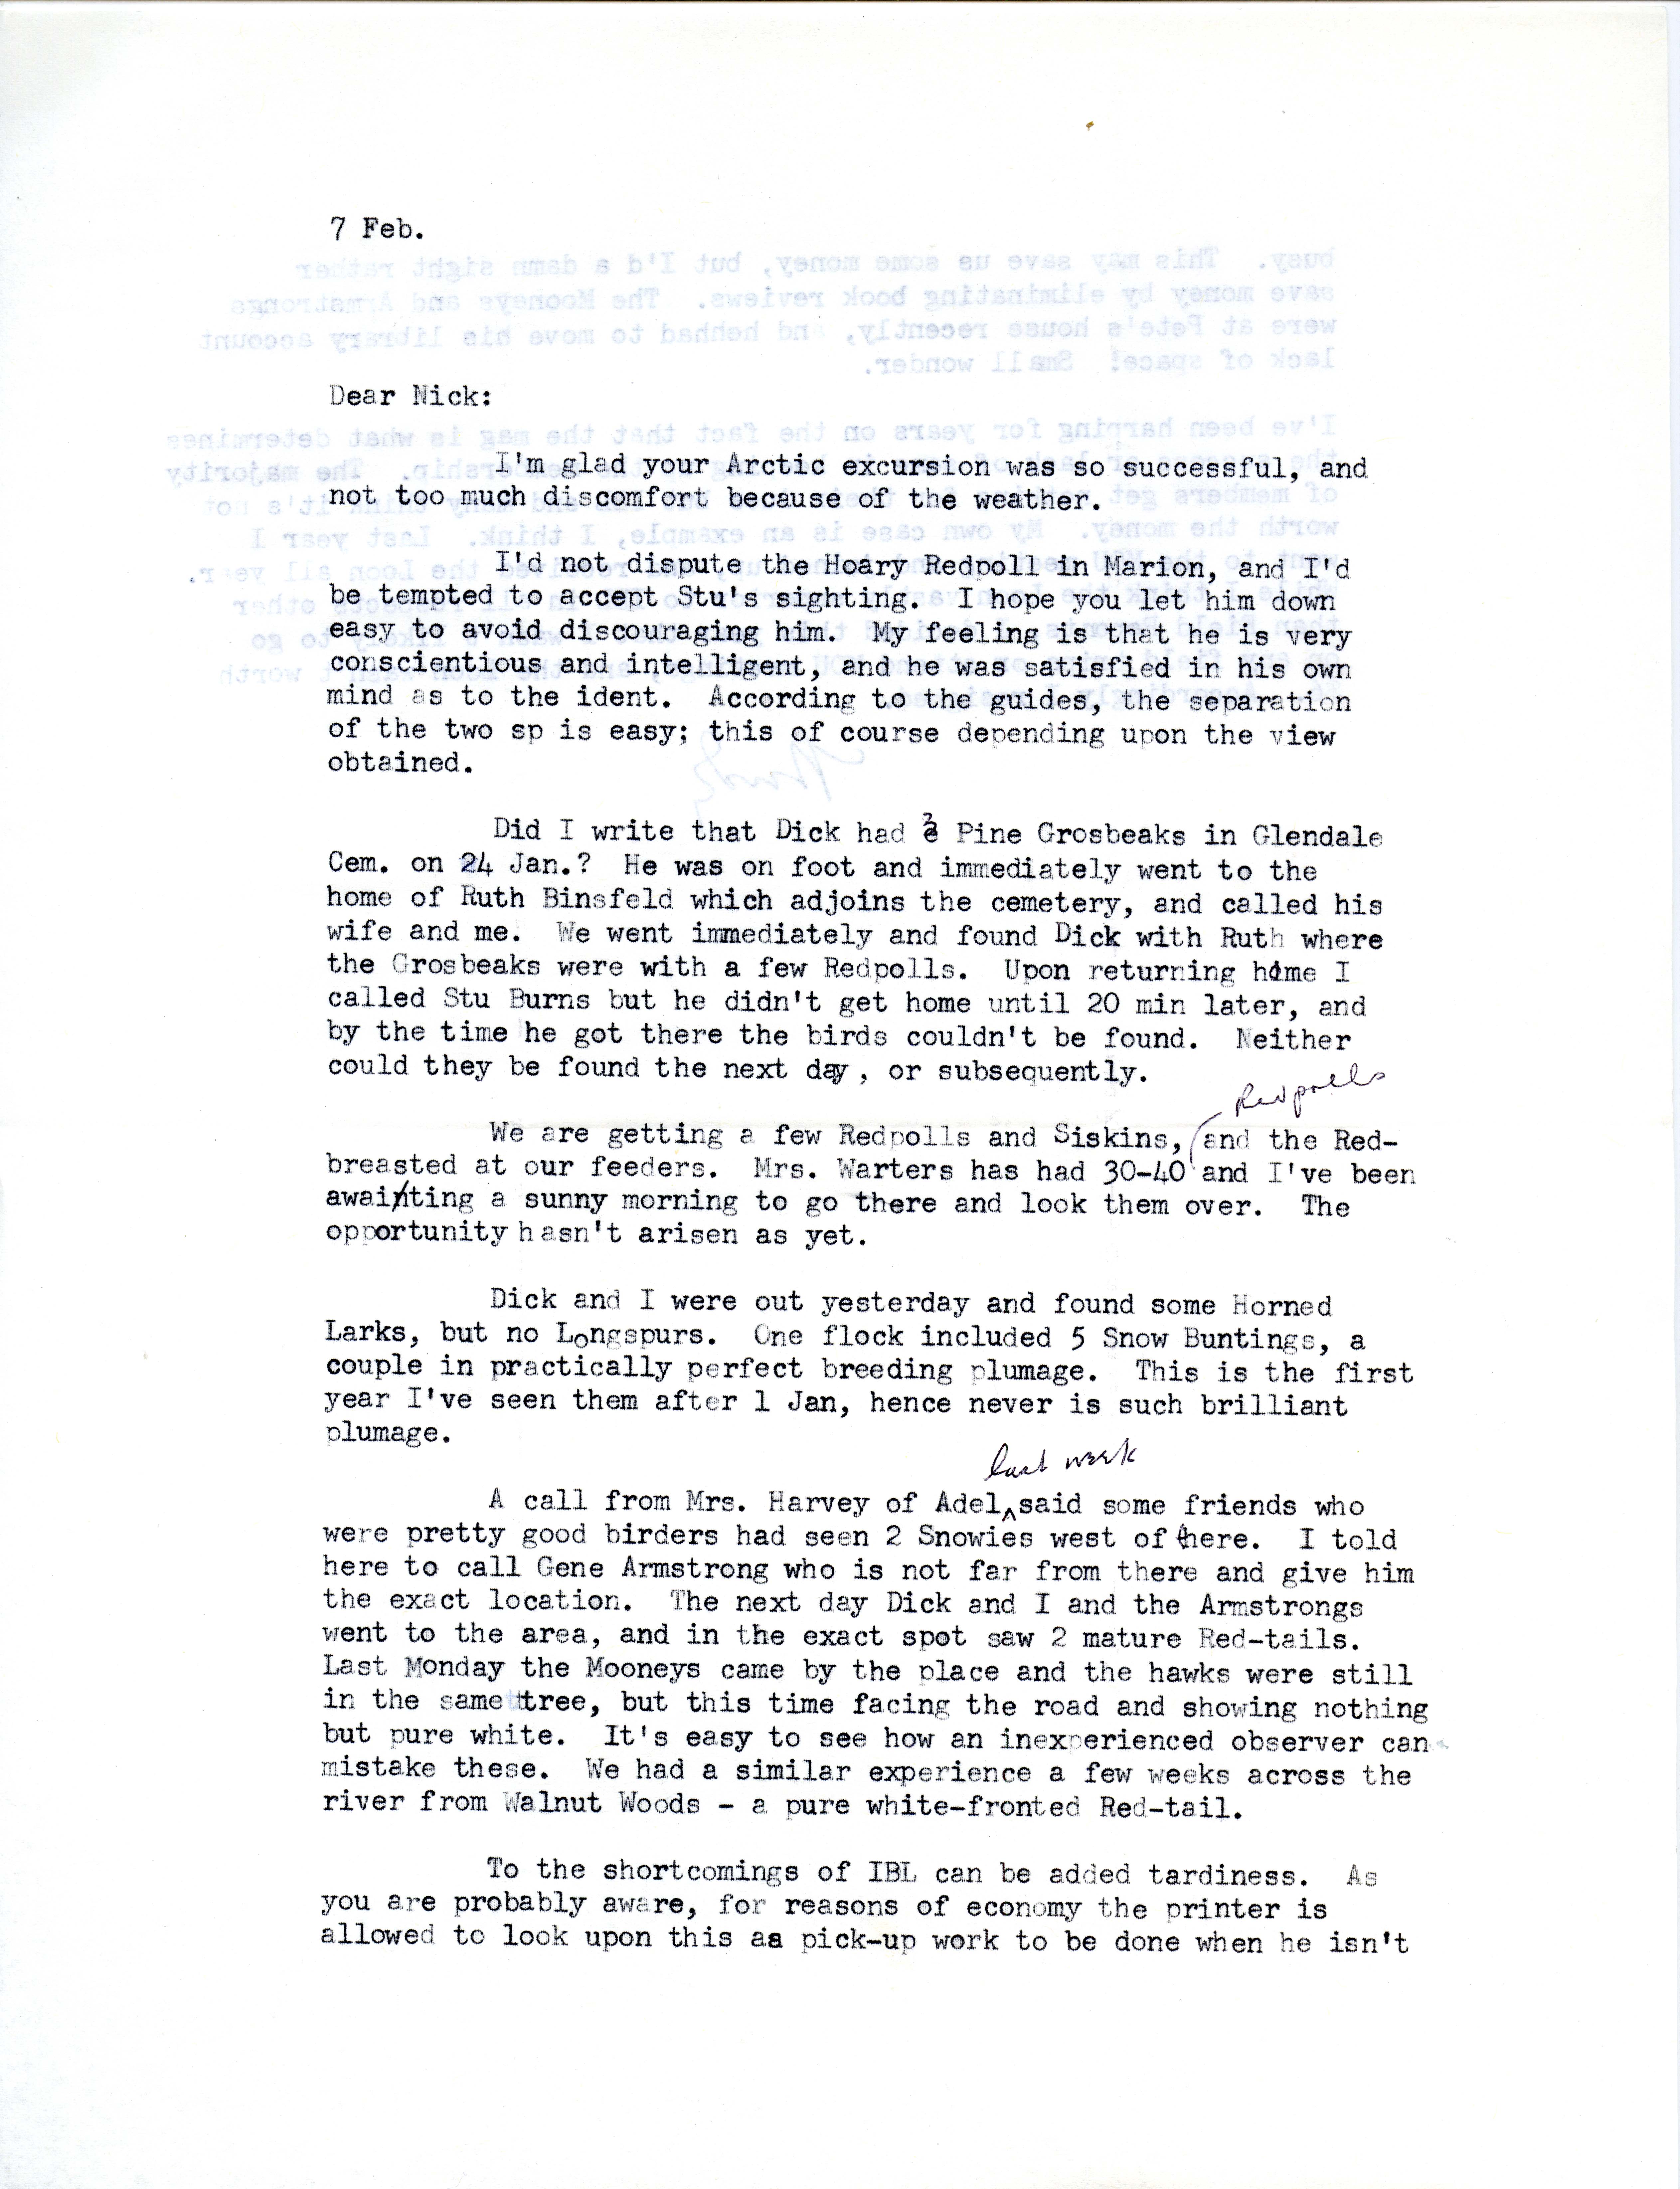 Woodward H. Brown letter to Nicholas S. Halmi regarding bird sightings, February 7, 1978